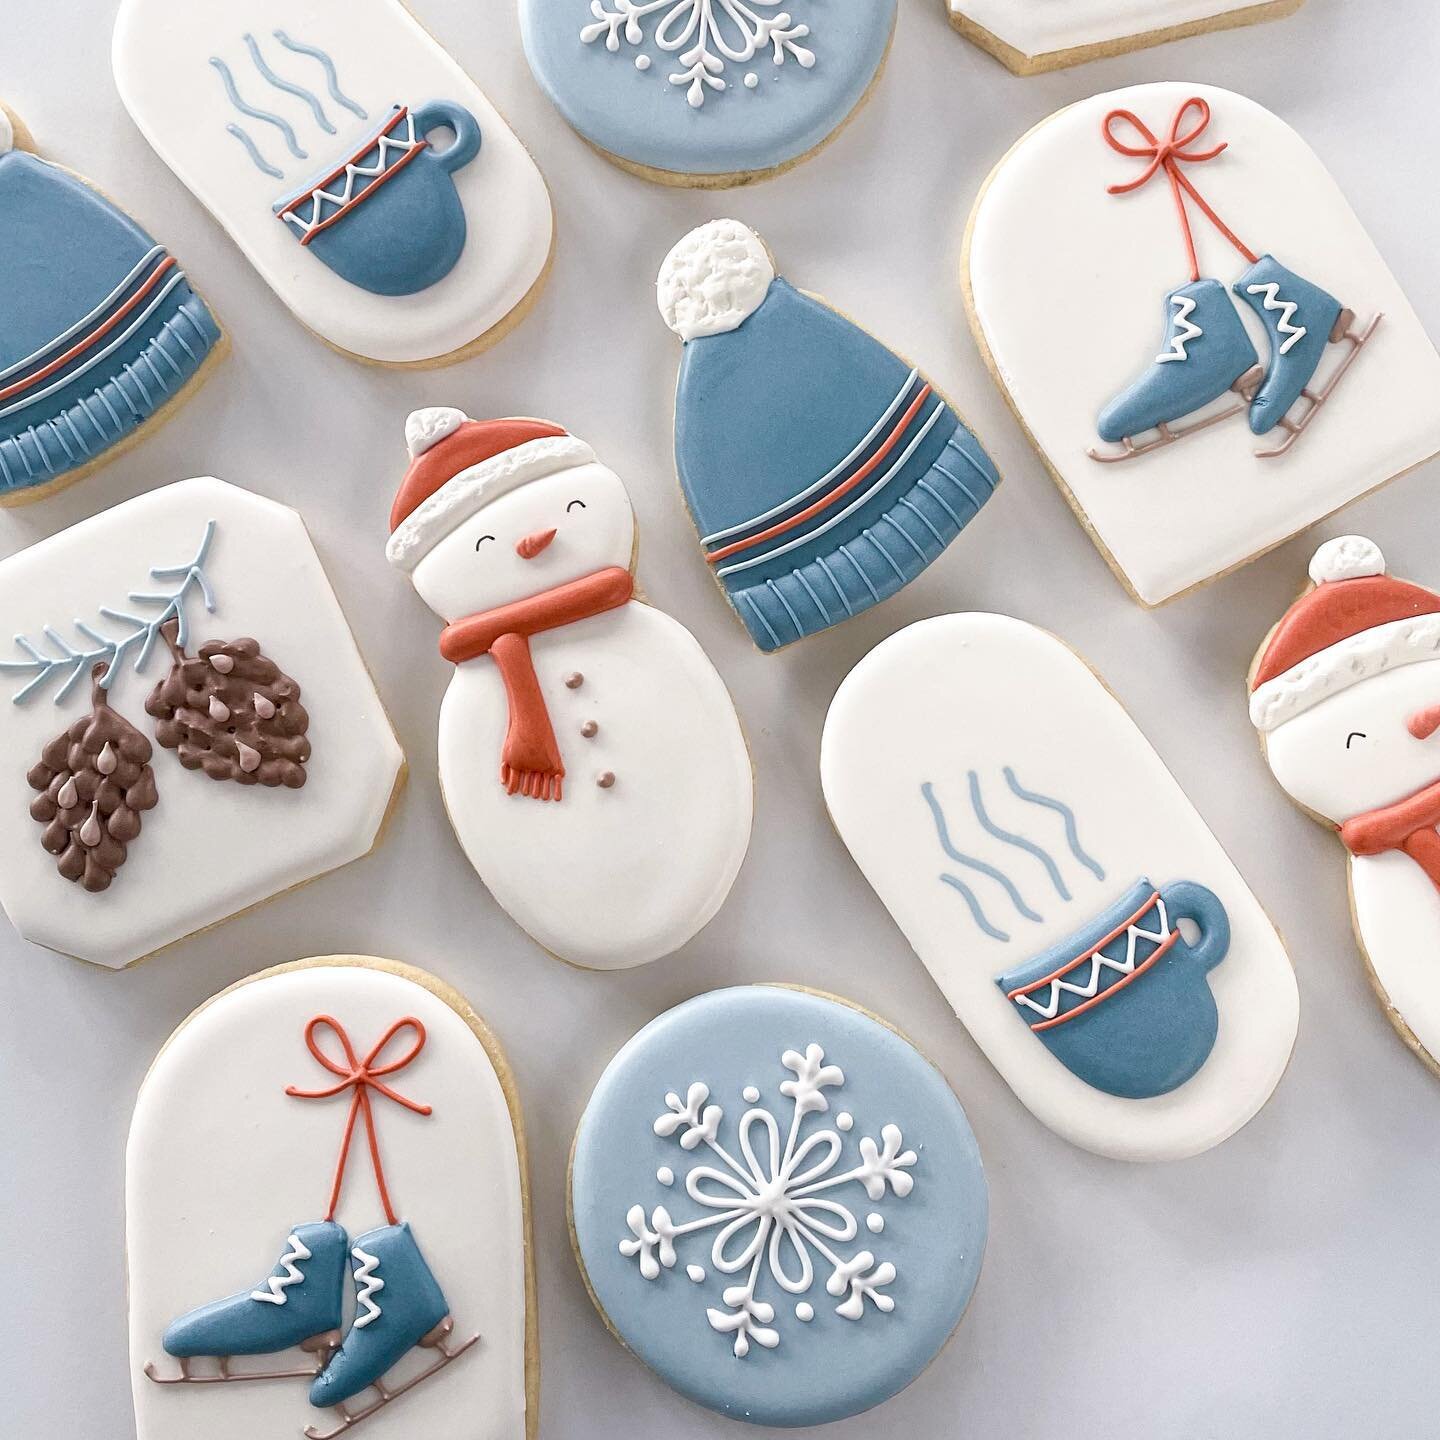 Happy new year, cookie friends! Wintery cookies for a snowy day ❄️ 

#wintercookies #snowmancookies #decoratedcookies